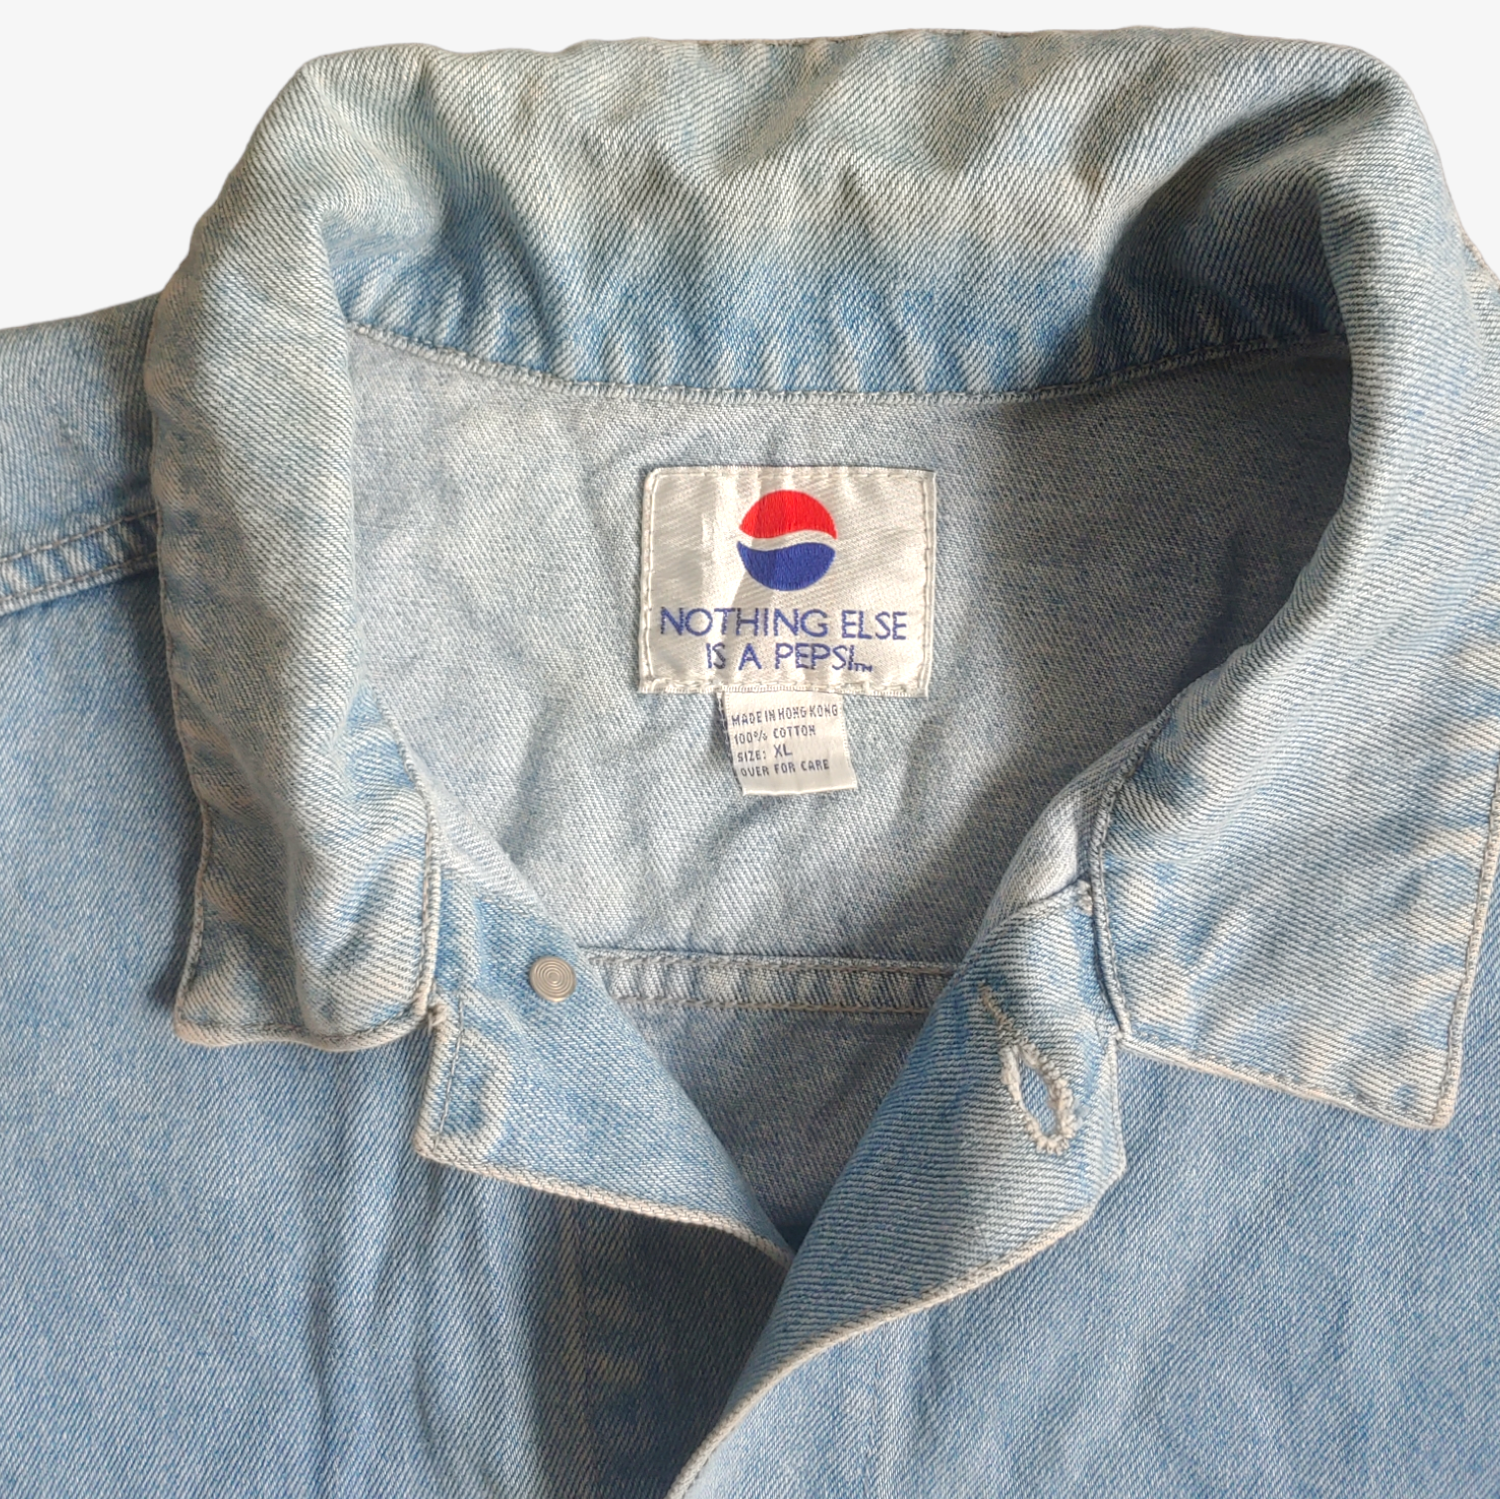 Vintage 90s Pepsi Soft Drink Promotional Denim Jacket Label - Casspios Dream